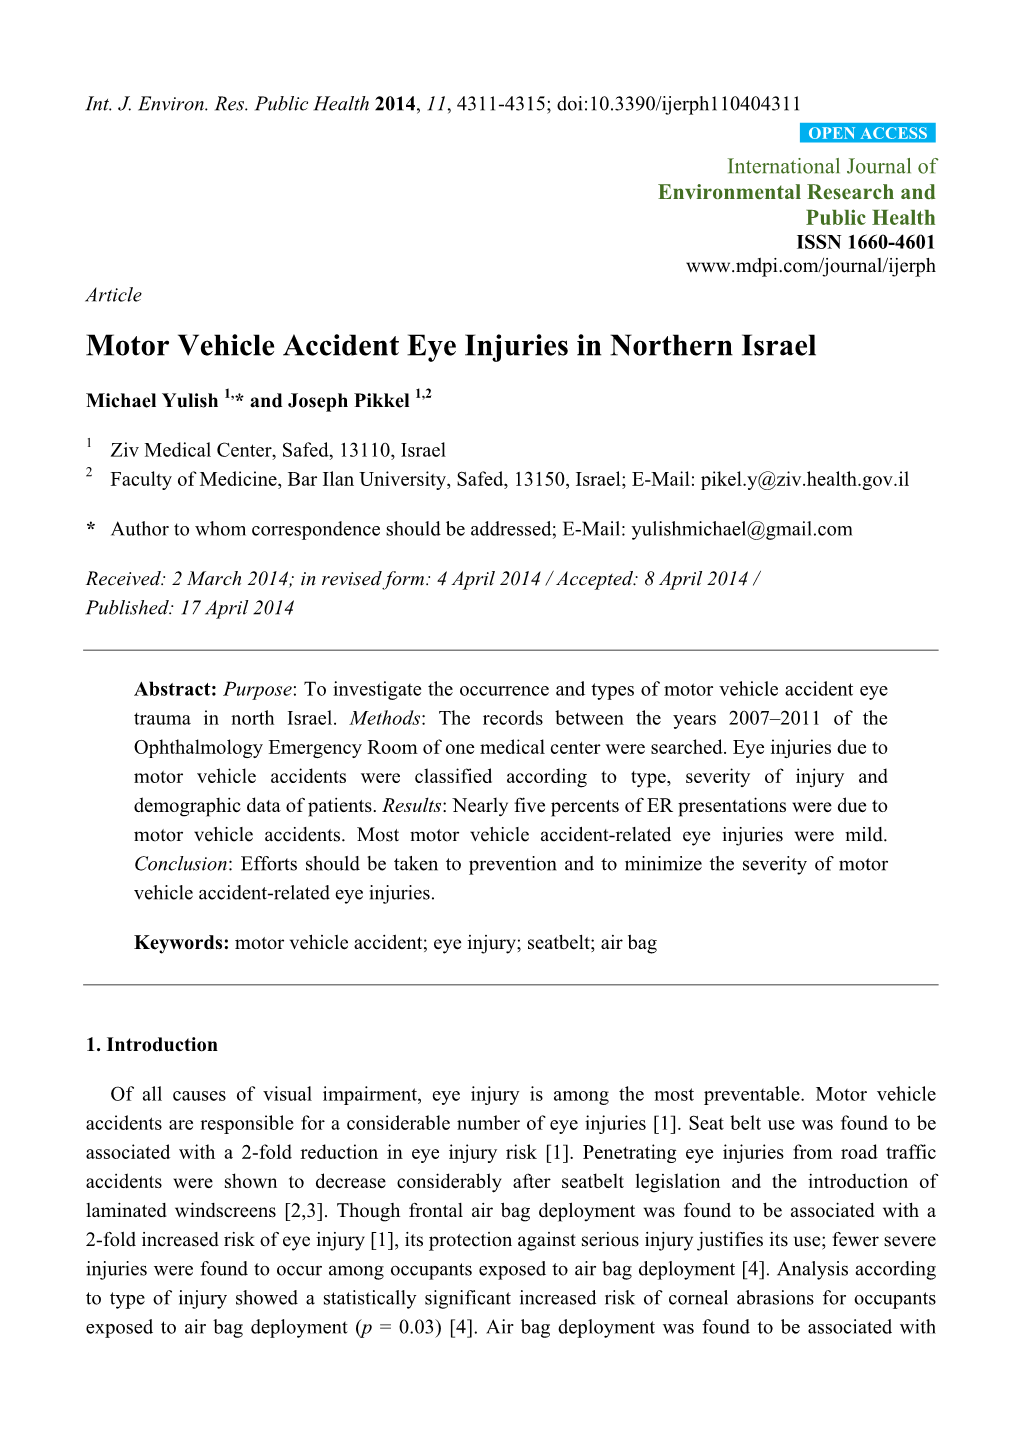 Motor Vehicle Accident Eye Injuries in Northern Israel